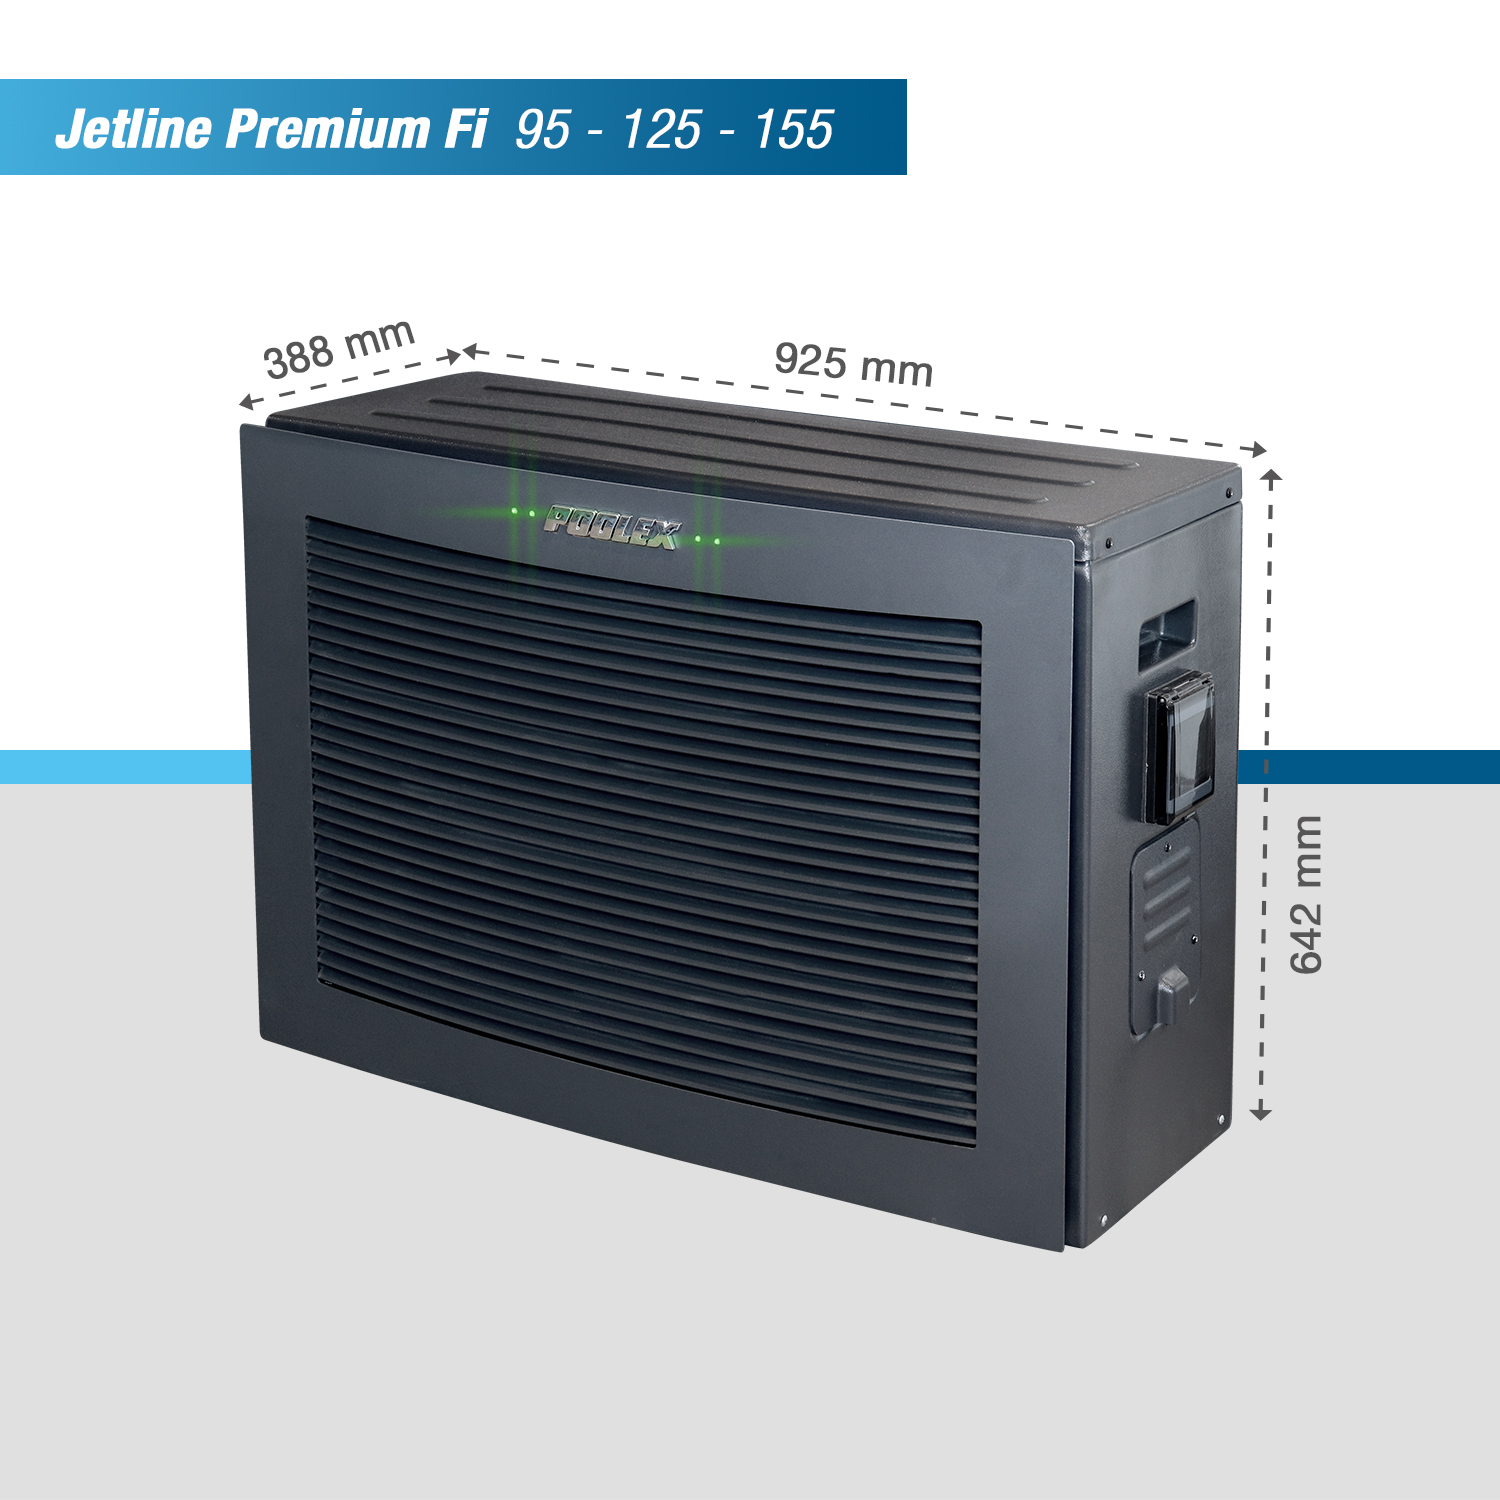 Poolex Jetline Premium Fi, dimensions moyenne